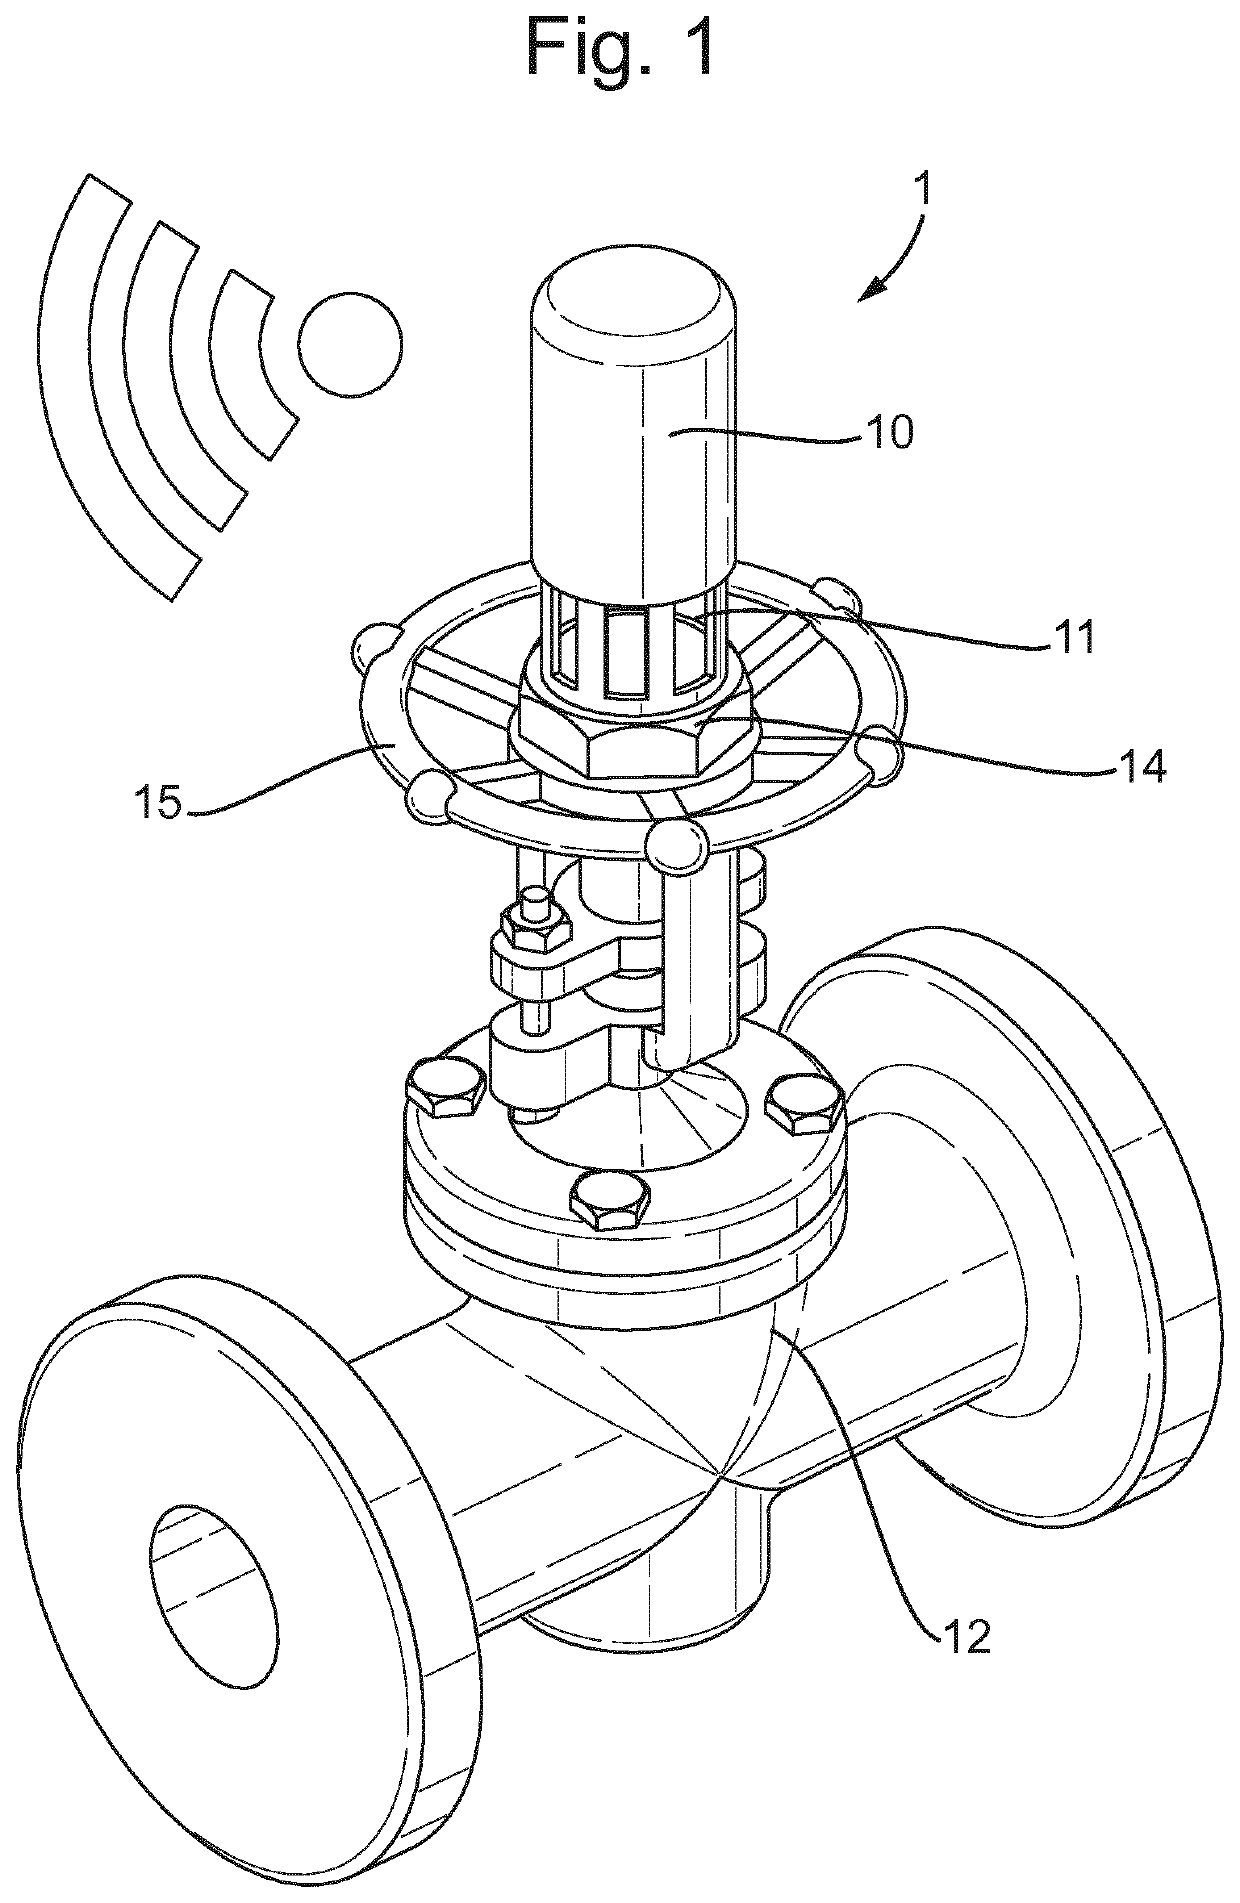 A valve position sensor